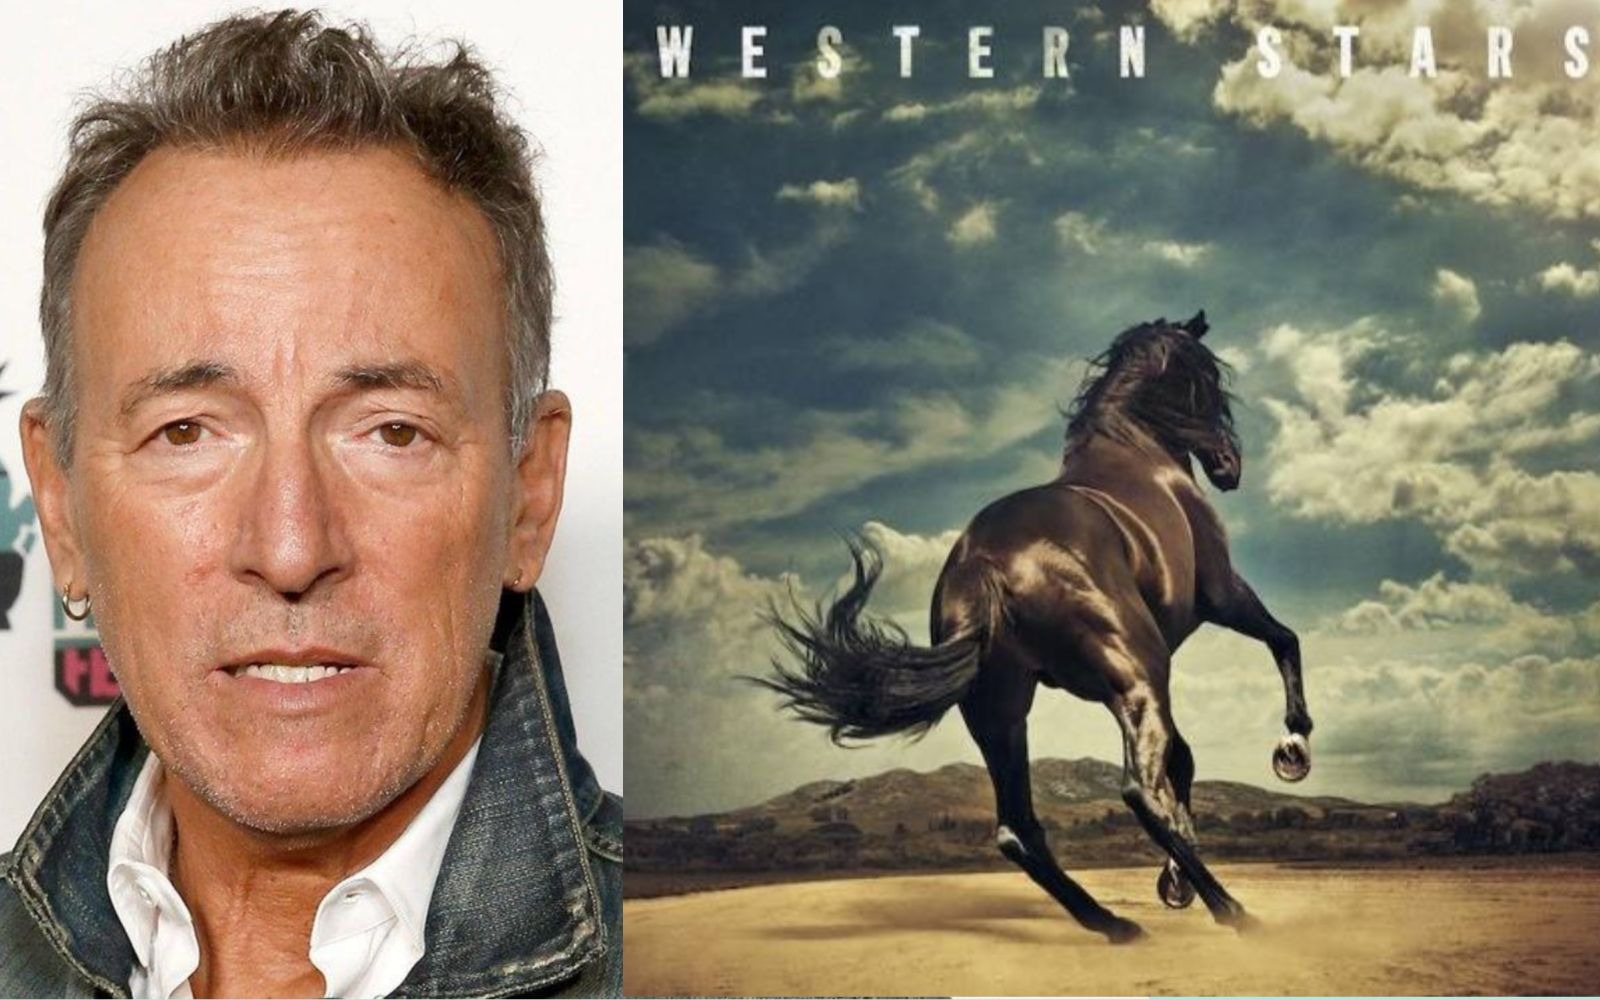 Bruce Springsteen new album